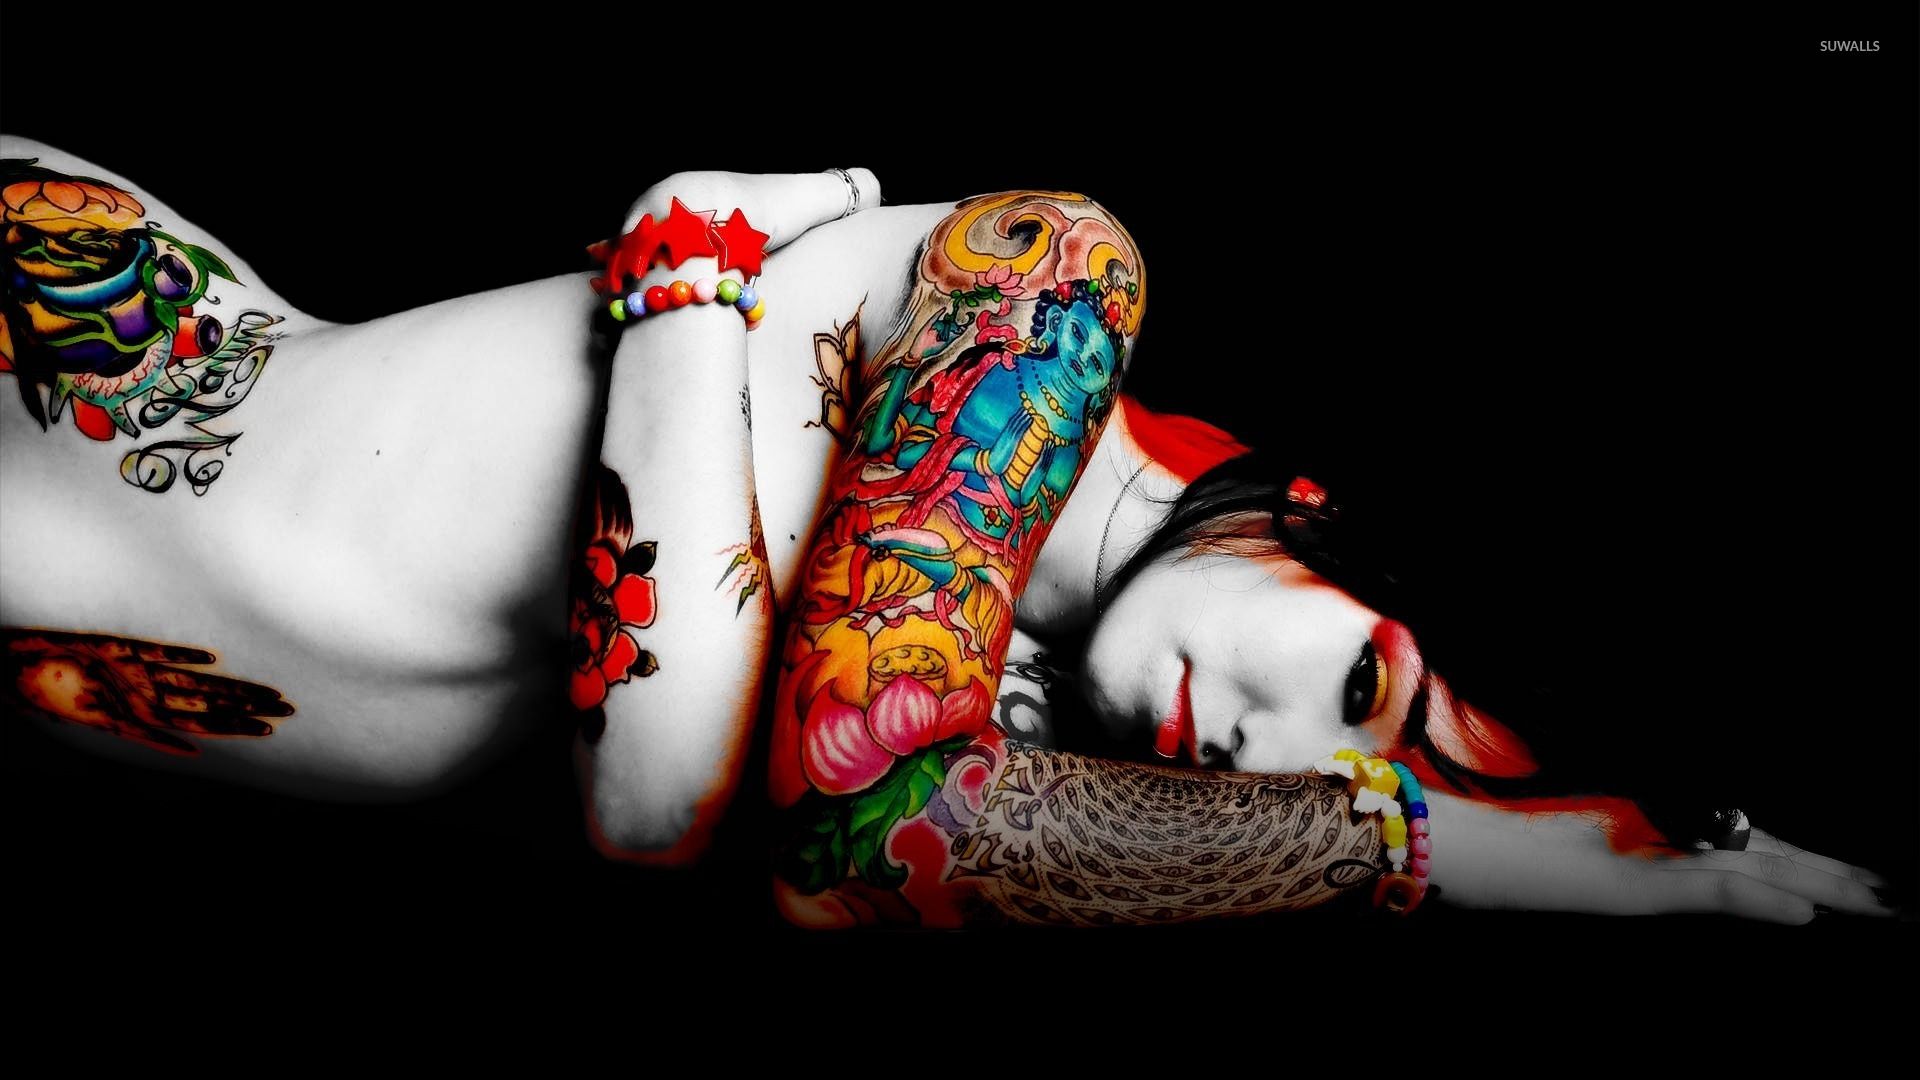 Fondo de pantalla de mujer con tatuajes coloridos - Fondos de pantalla artísticos - # 52912